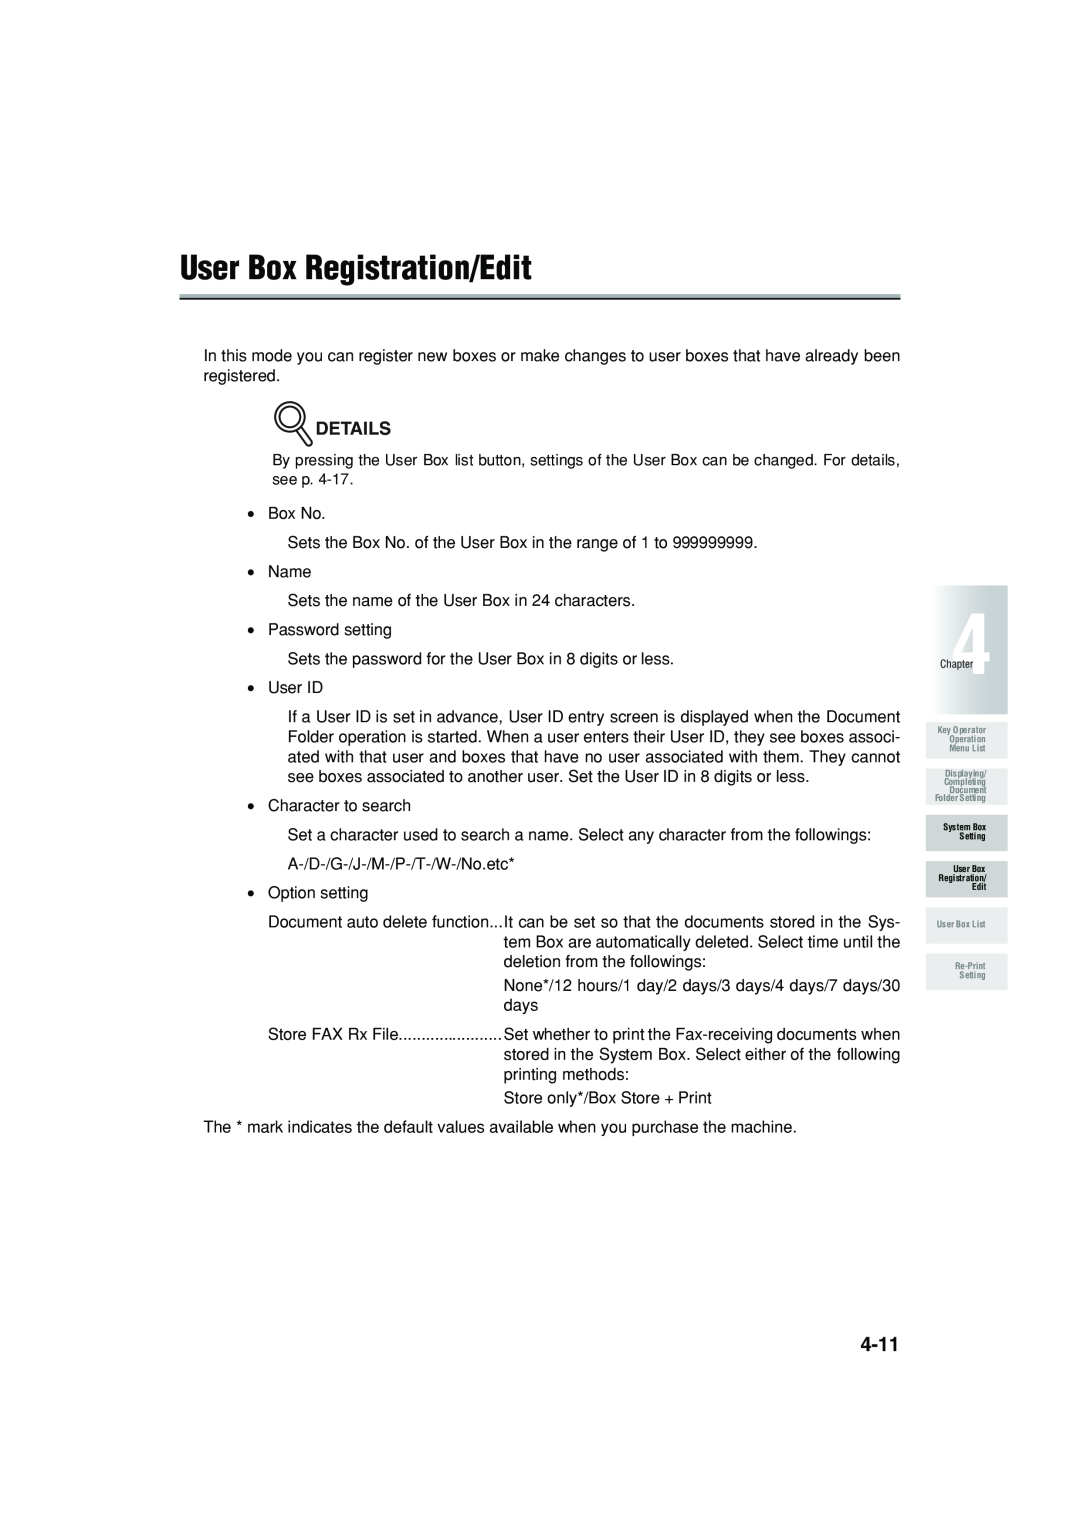 Konica Minolta 7222 manual User Box Registration/Edit, Details, User Box Registration Edit 